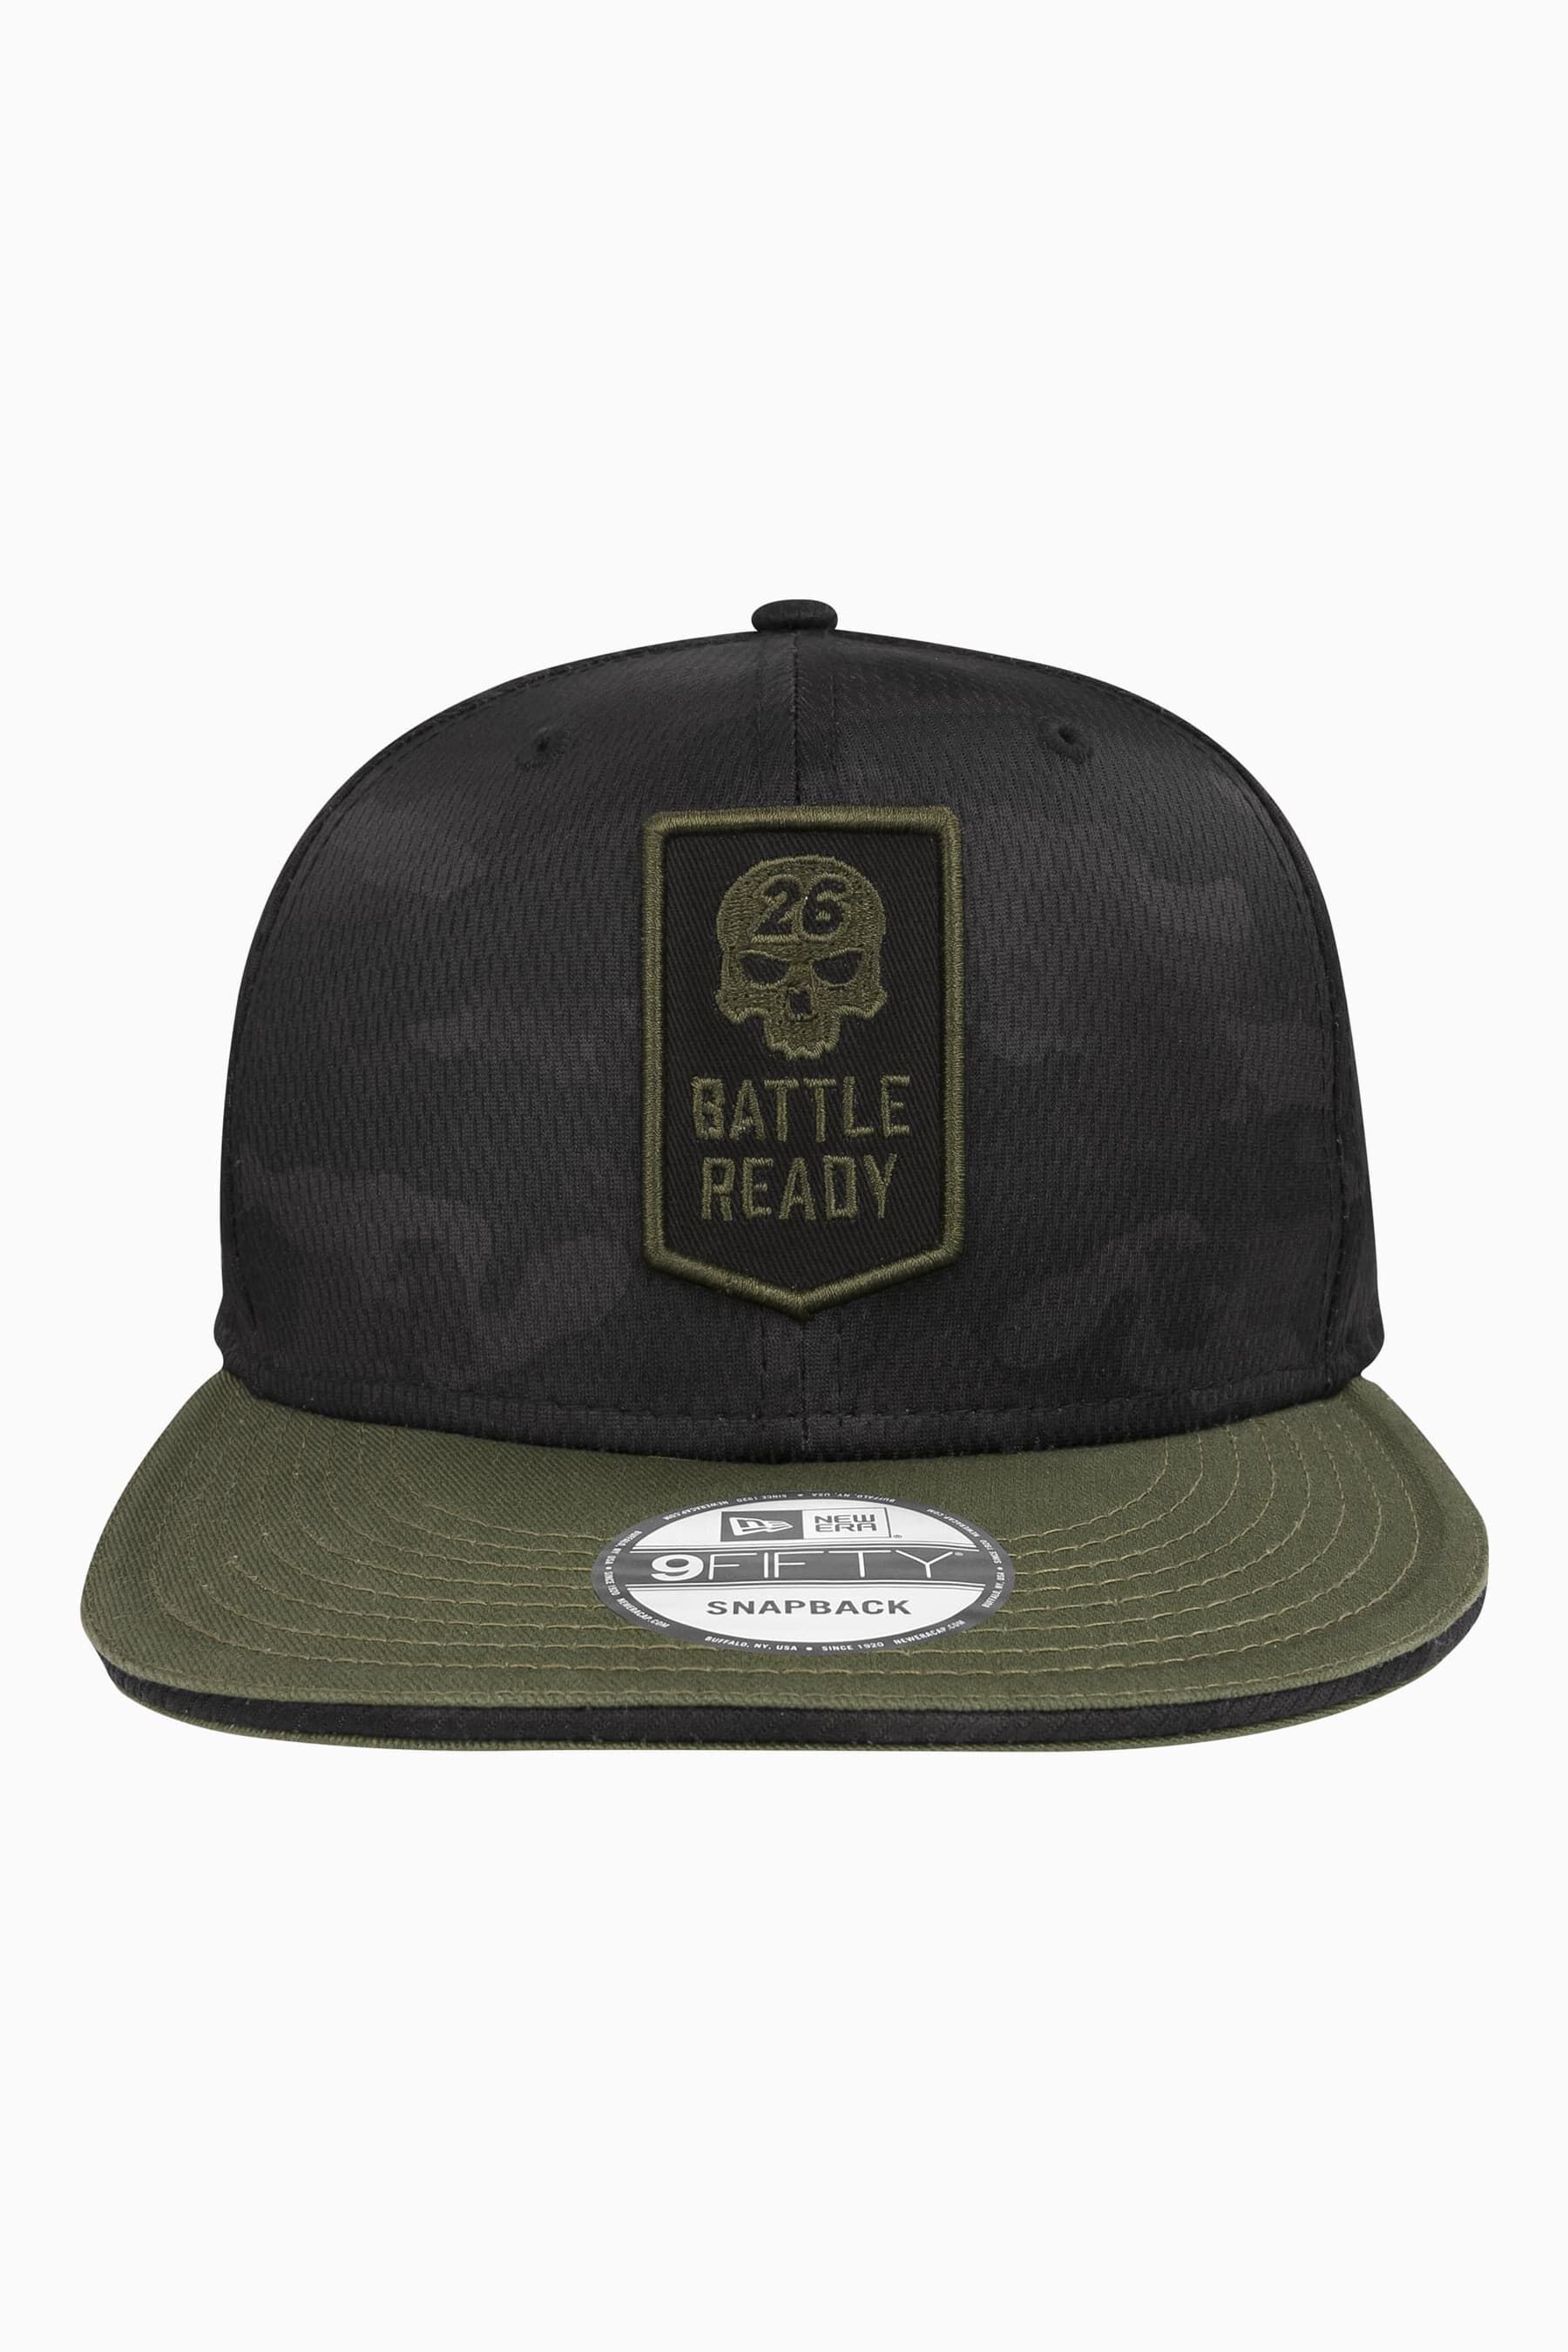 Buy Battle Ready 9FIFTY Adjustable Cap | PXG